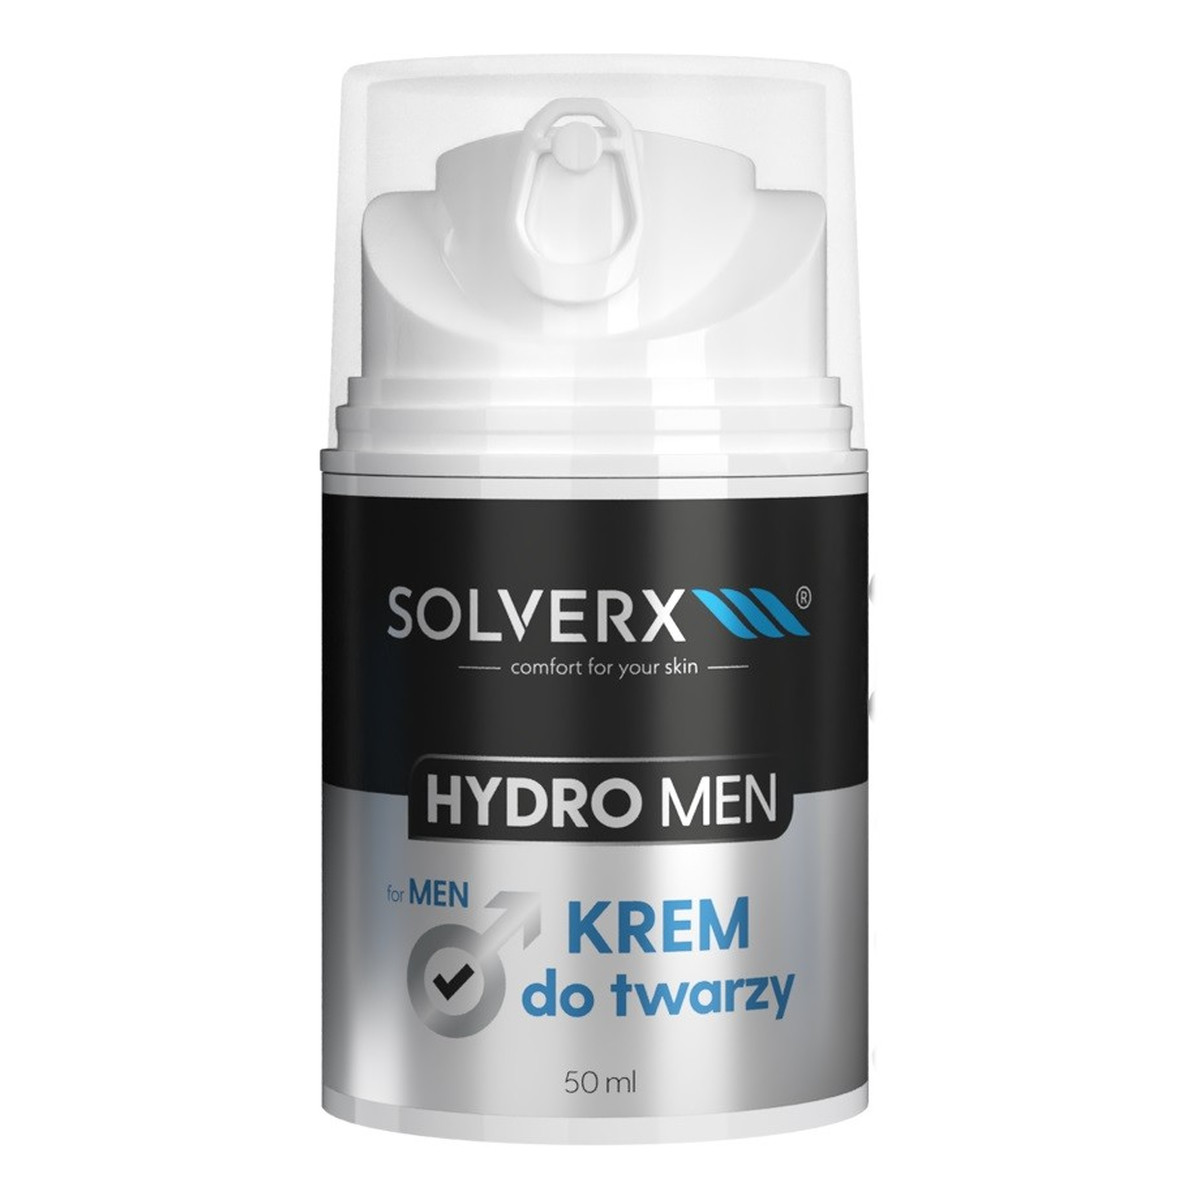 Solverx Hydro Men Krem do twarzy 50ml